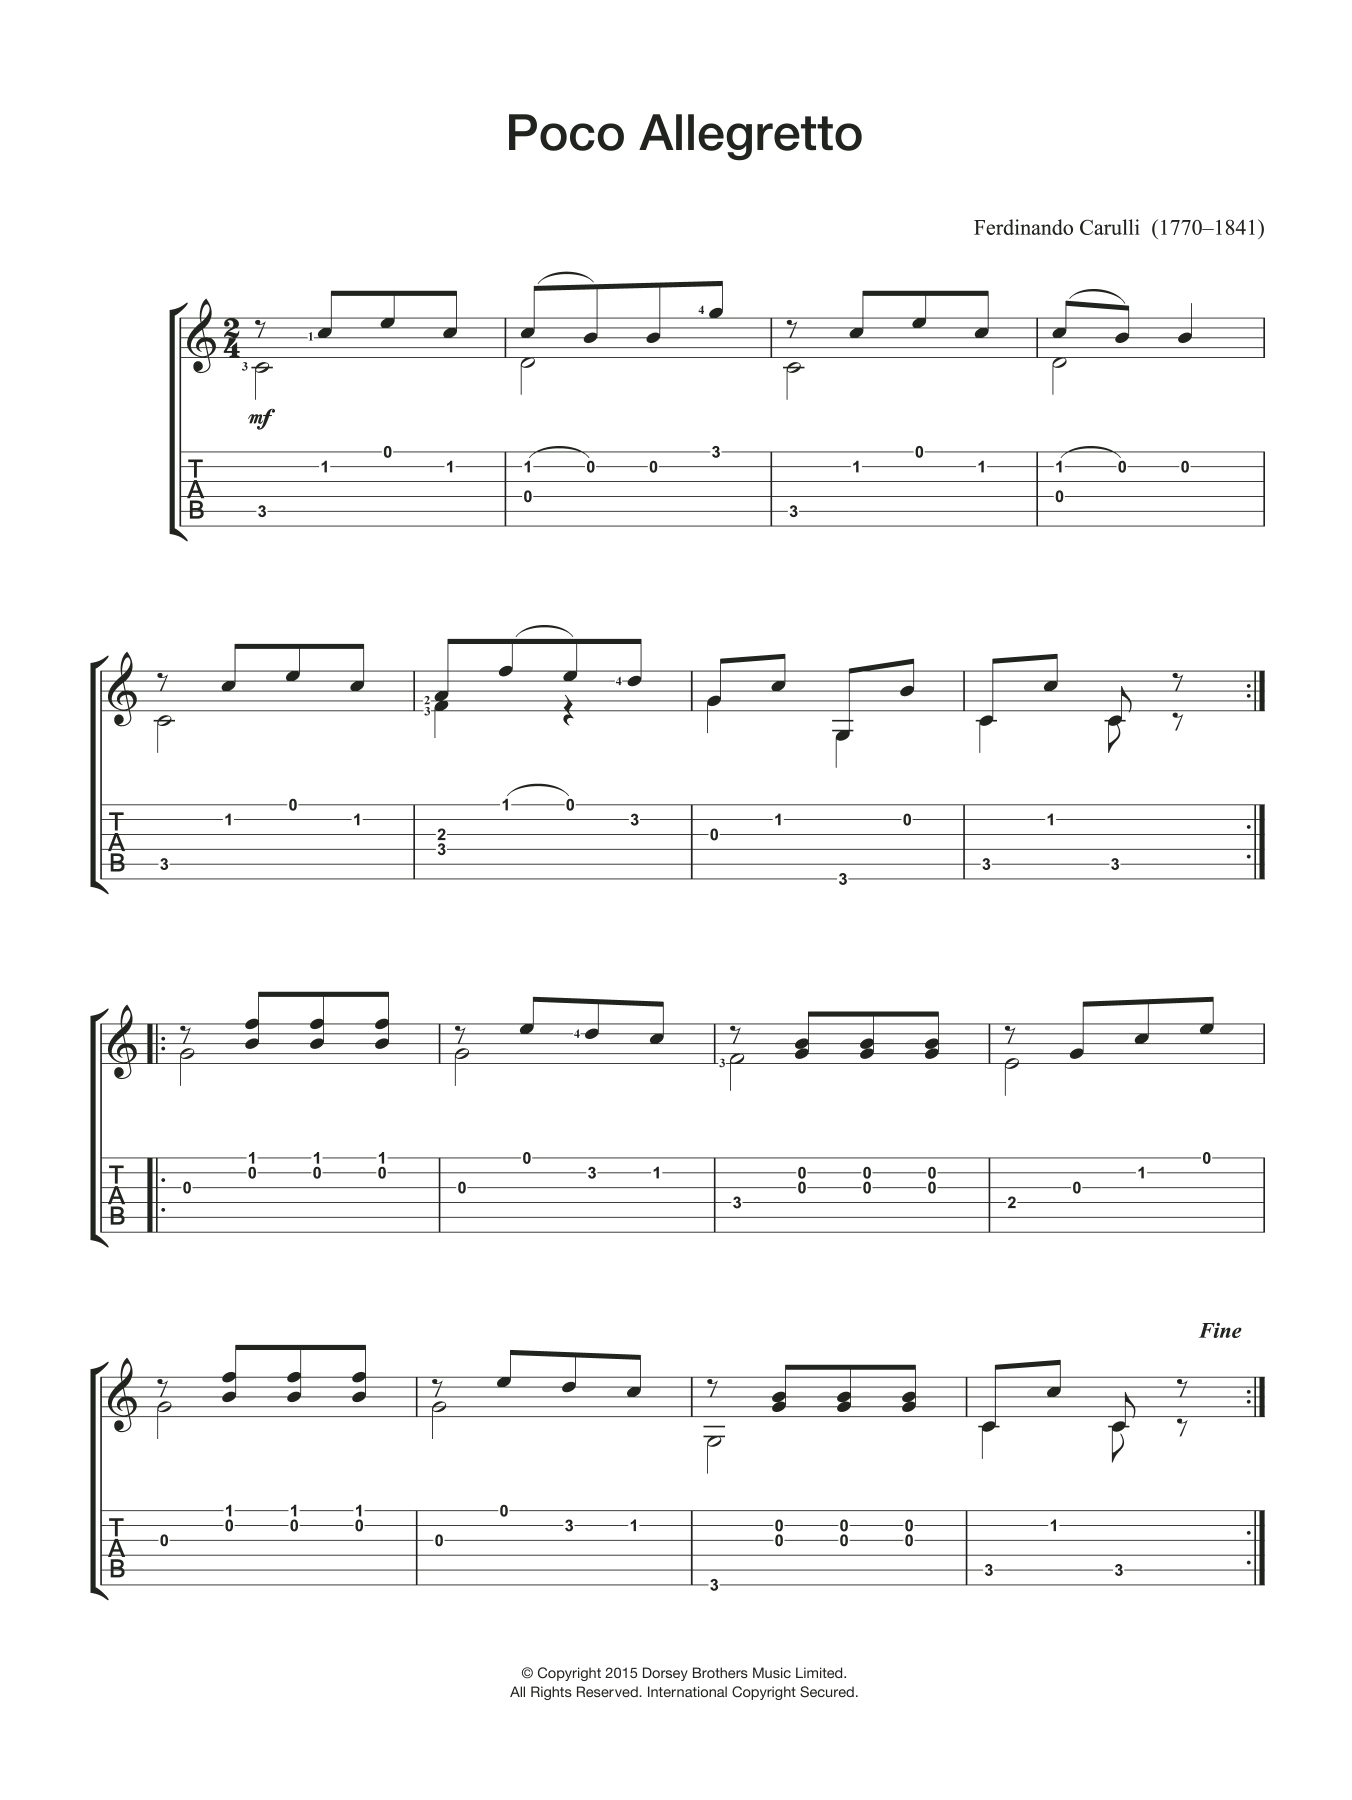 Ferdinando Carulli Poco Allegretto Sheet Music Notes & Chords for Guitar - Download or Print PDF